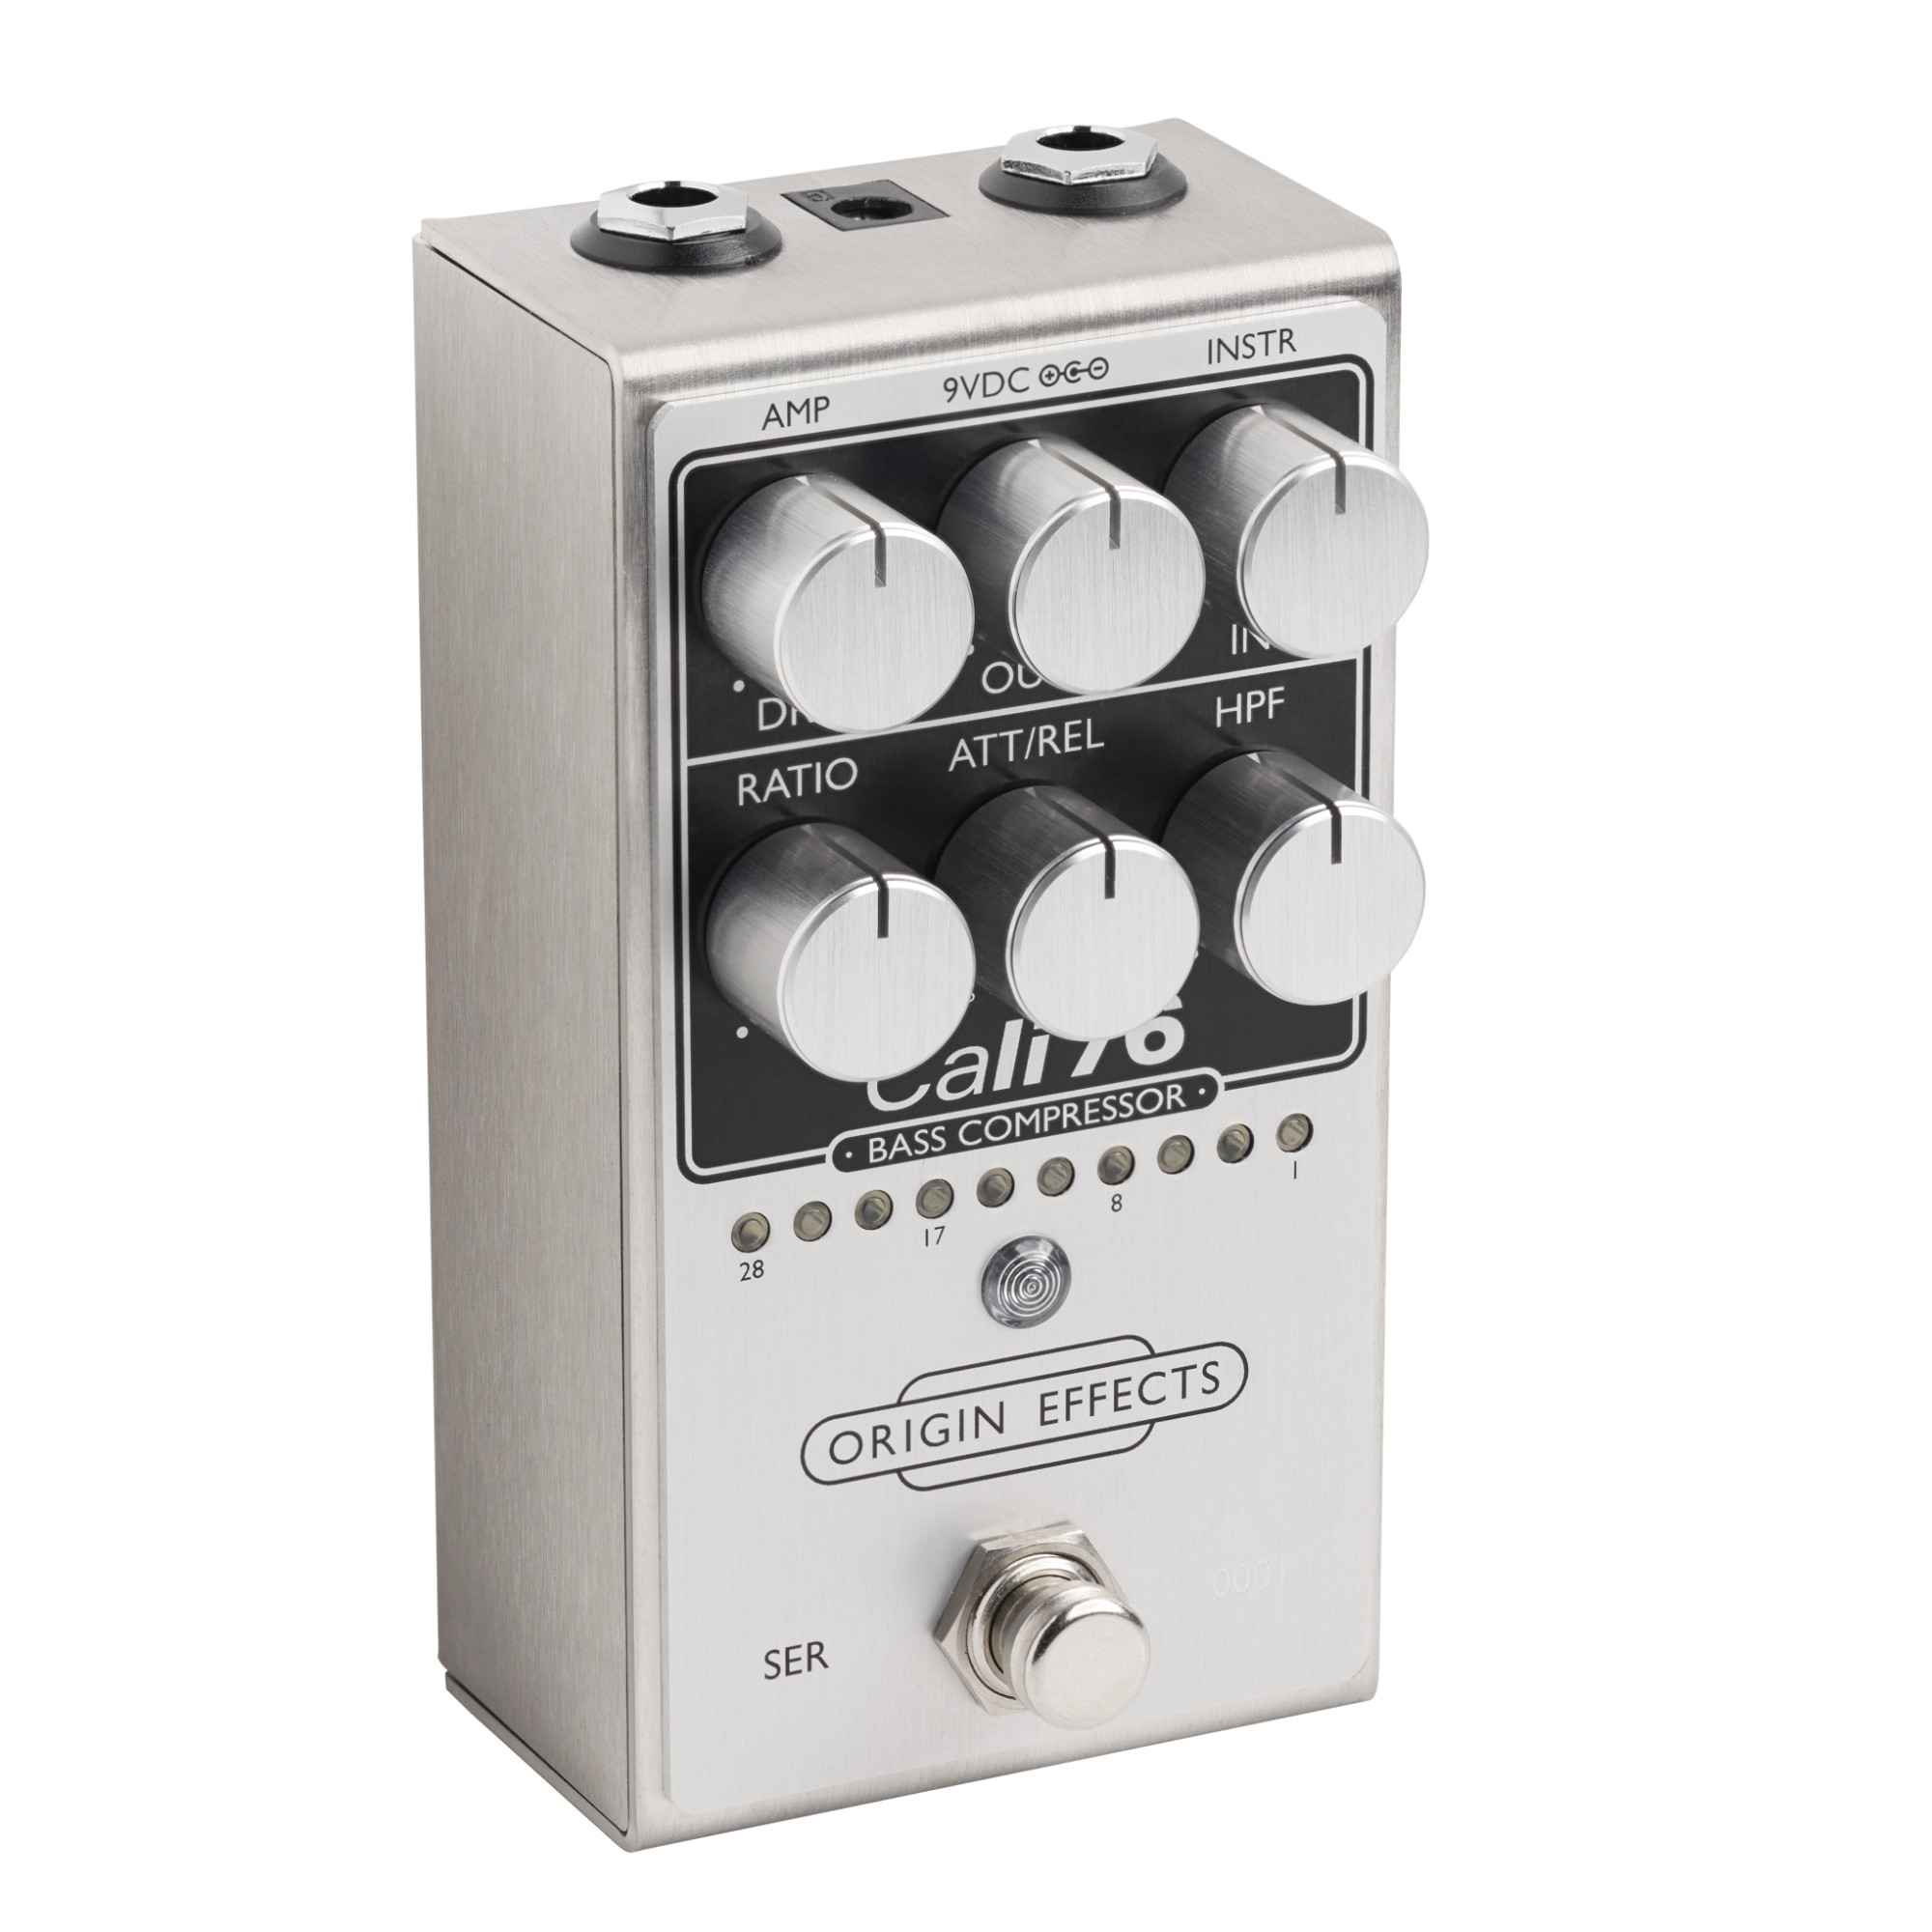 Origin Effects Cali76 Bass Compressor 2024 - Kompressor/Sustain/Noise gate Effektpedal - Variation 2